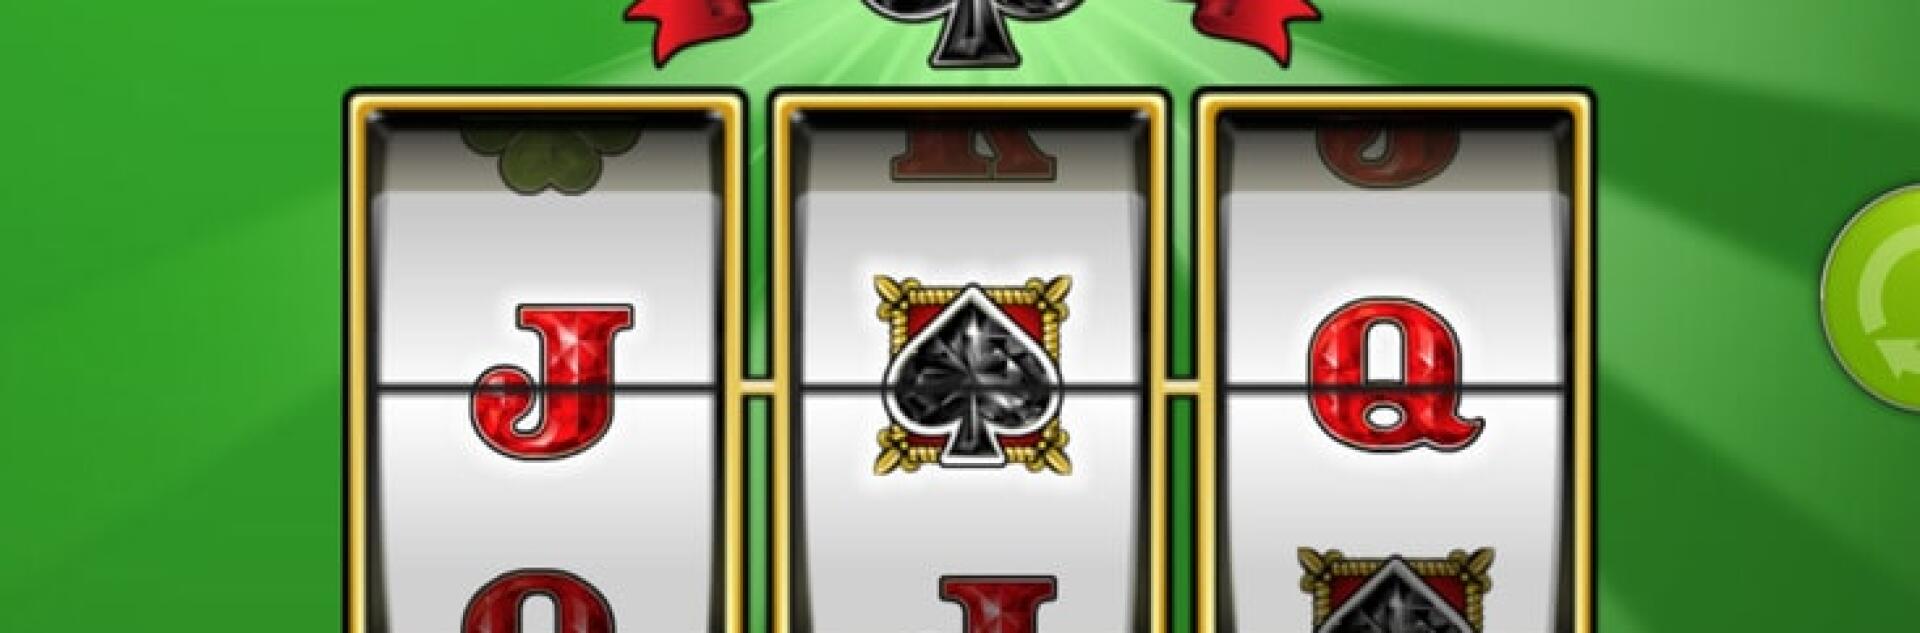 Ace of Spades Slot